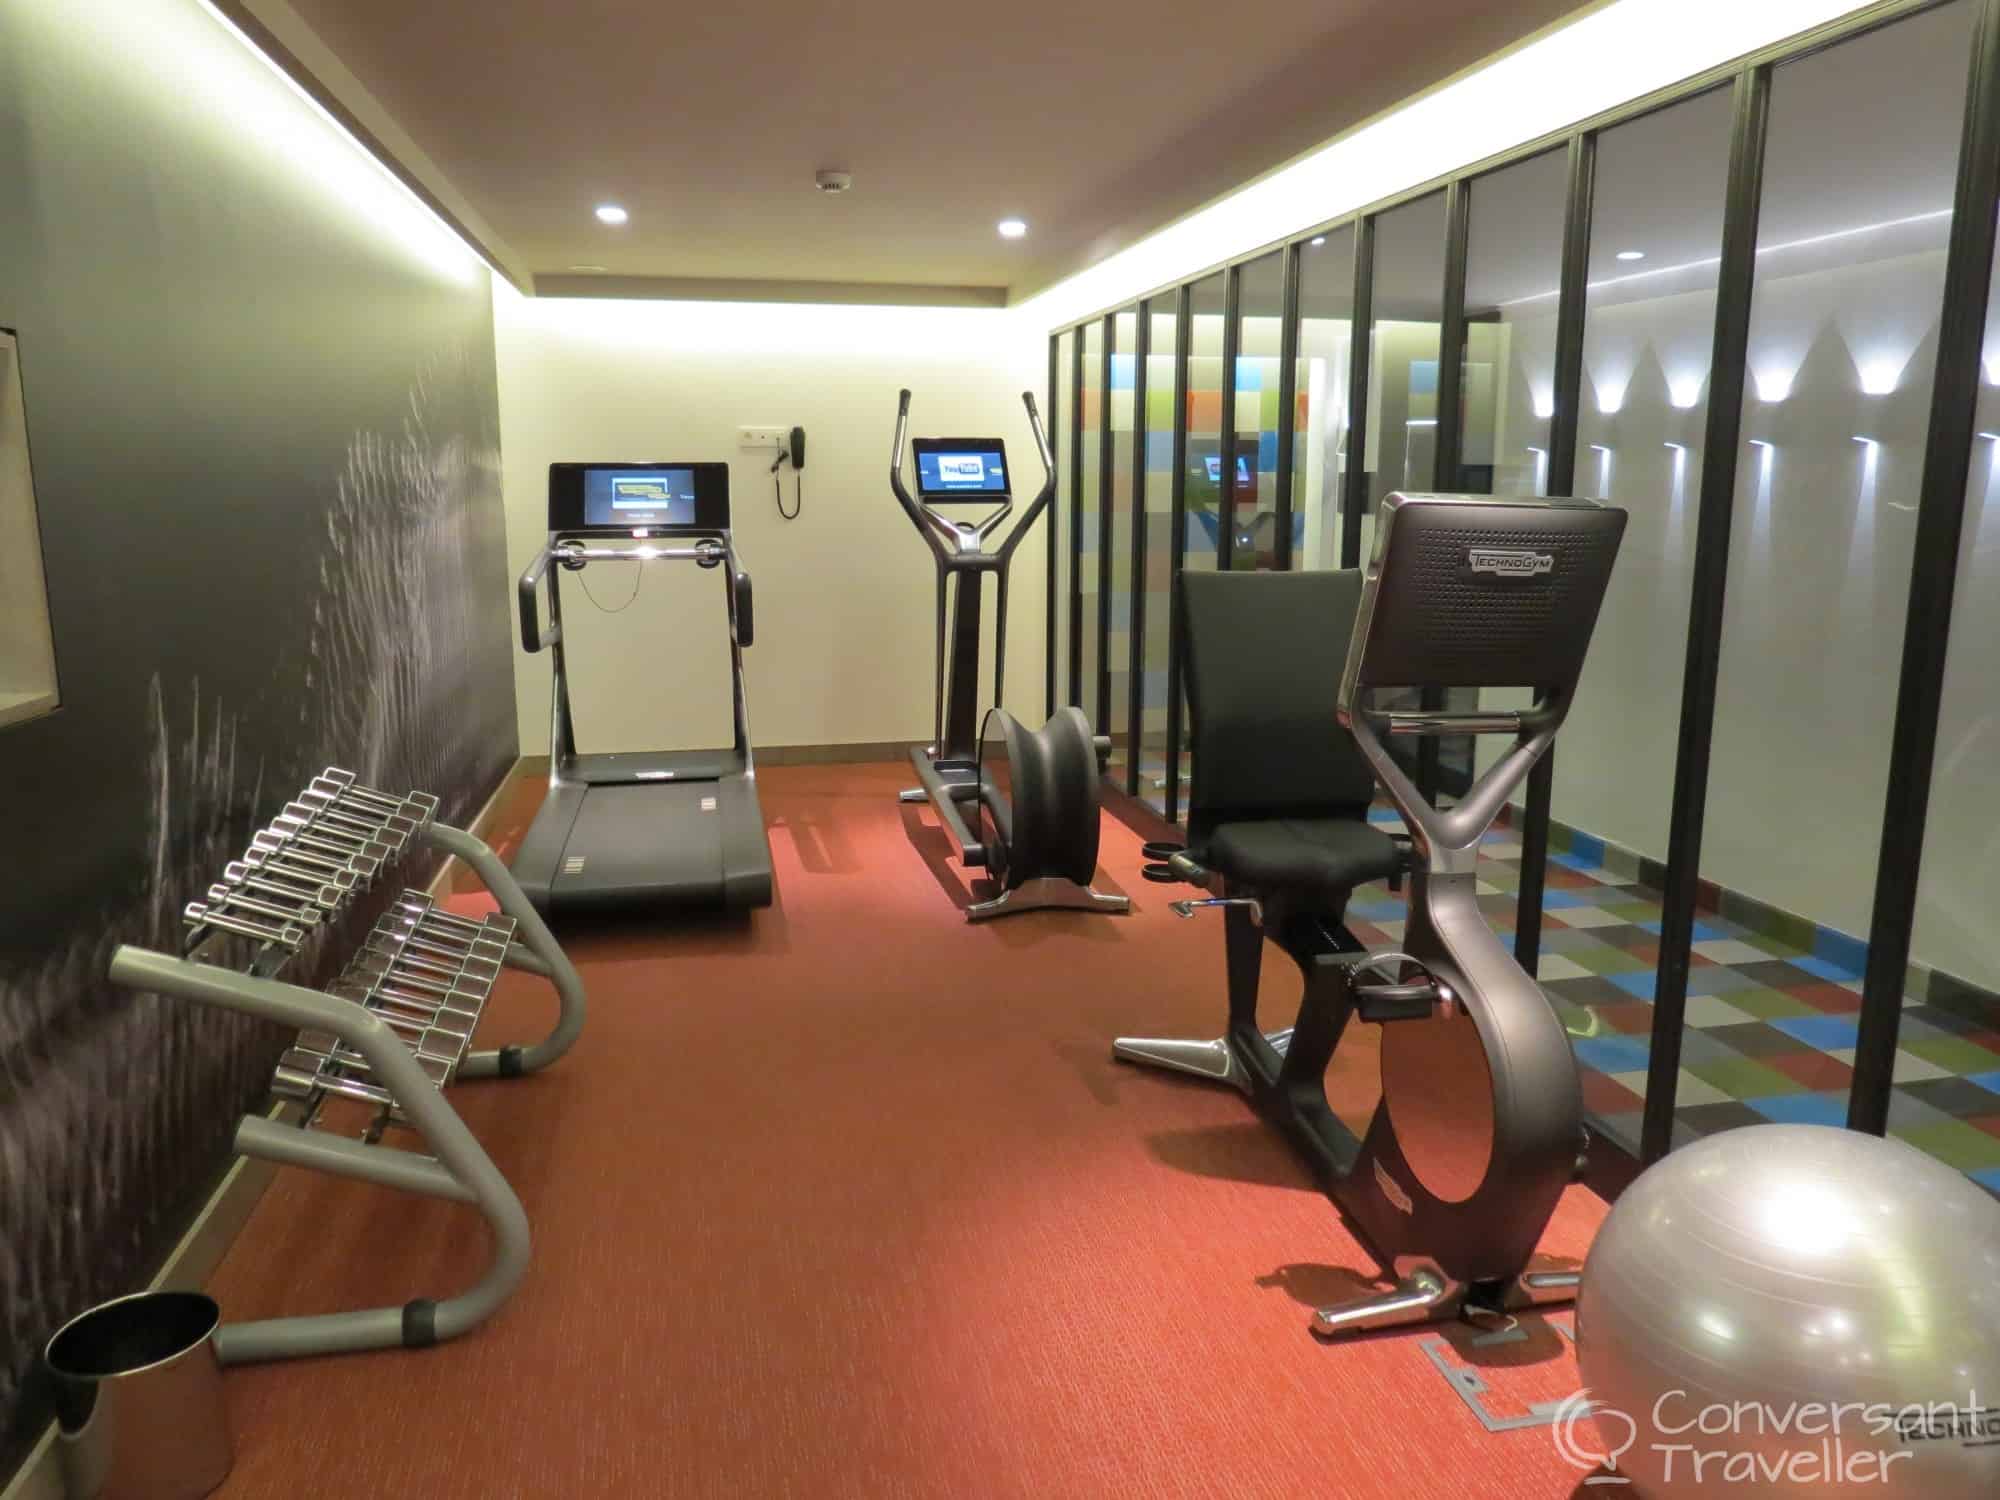 The fitness studio at Hotel D Strasbourg